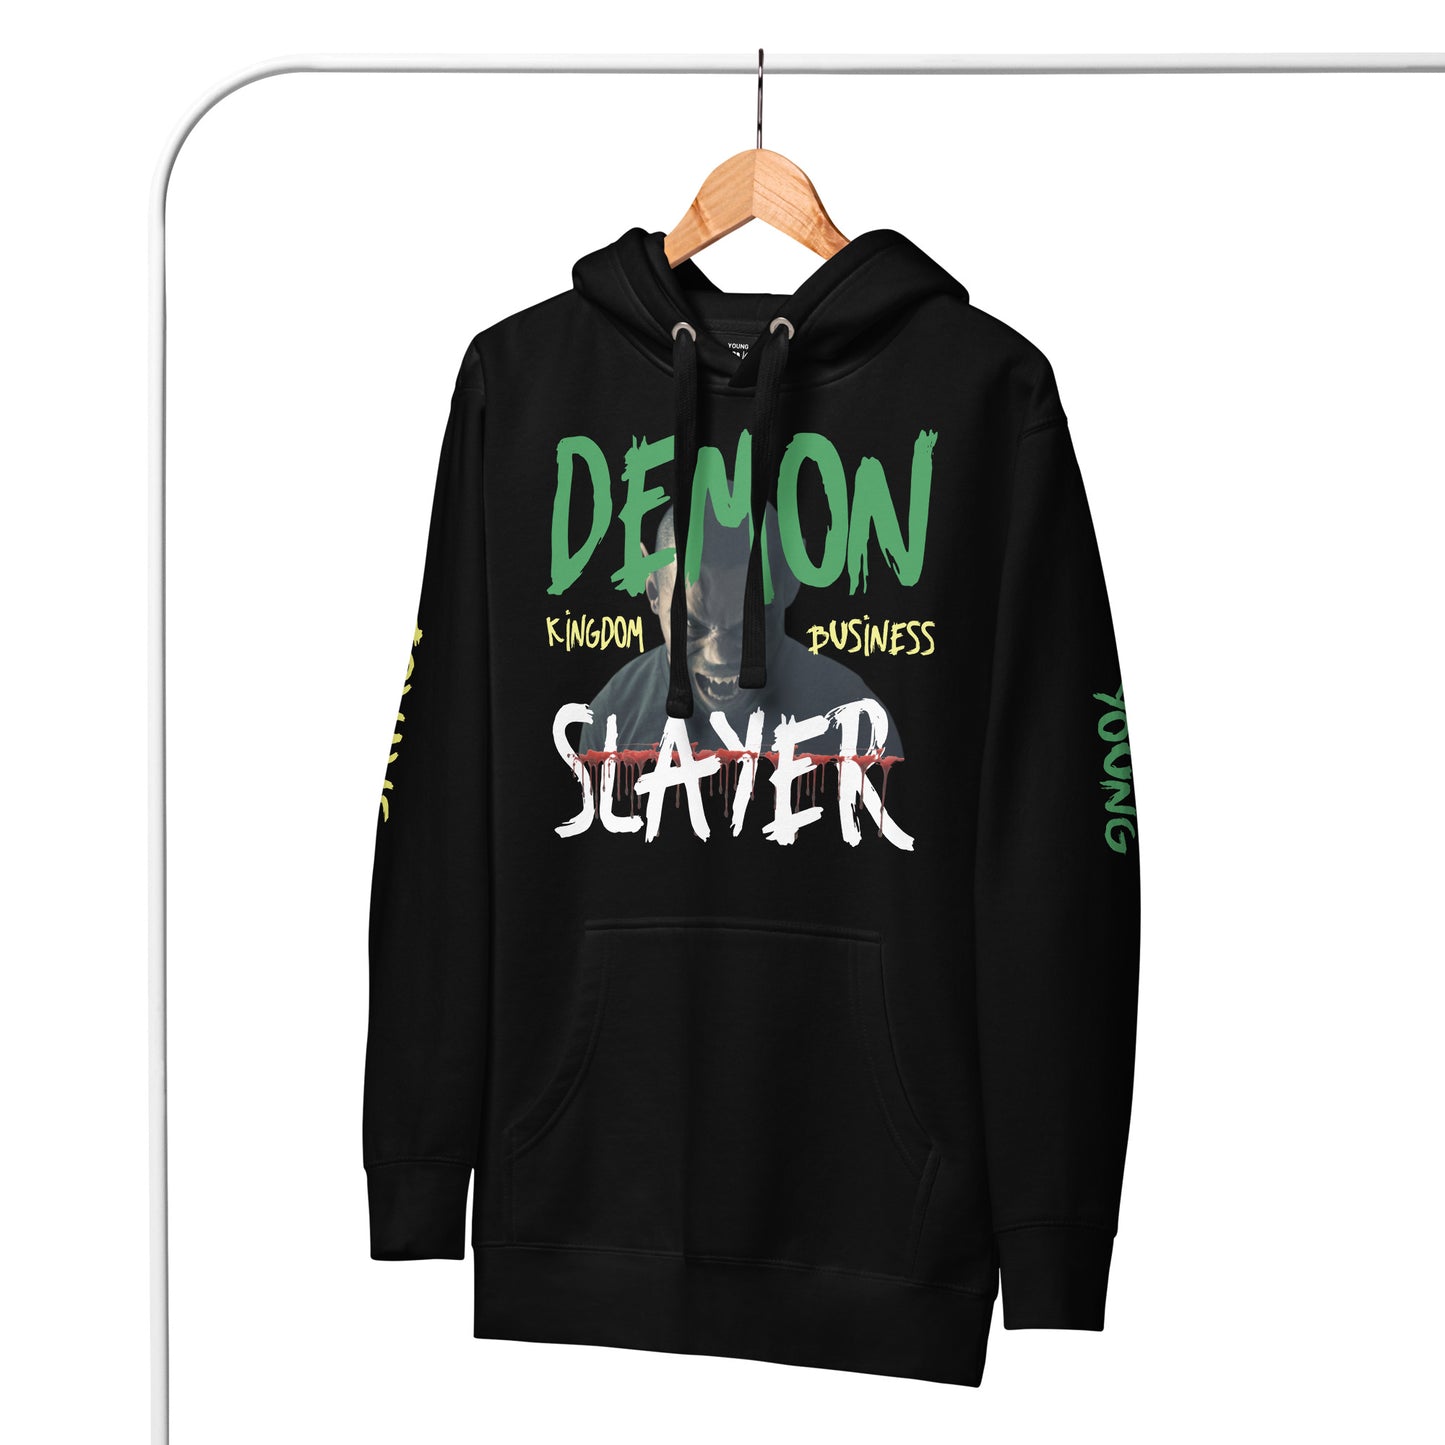 Demon Slayer - Unisex Hoodie